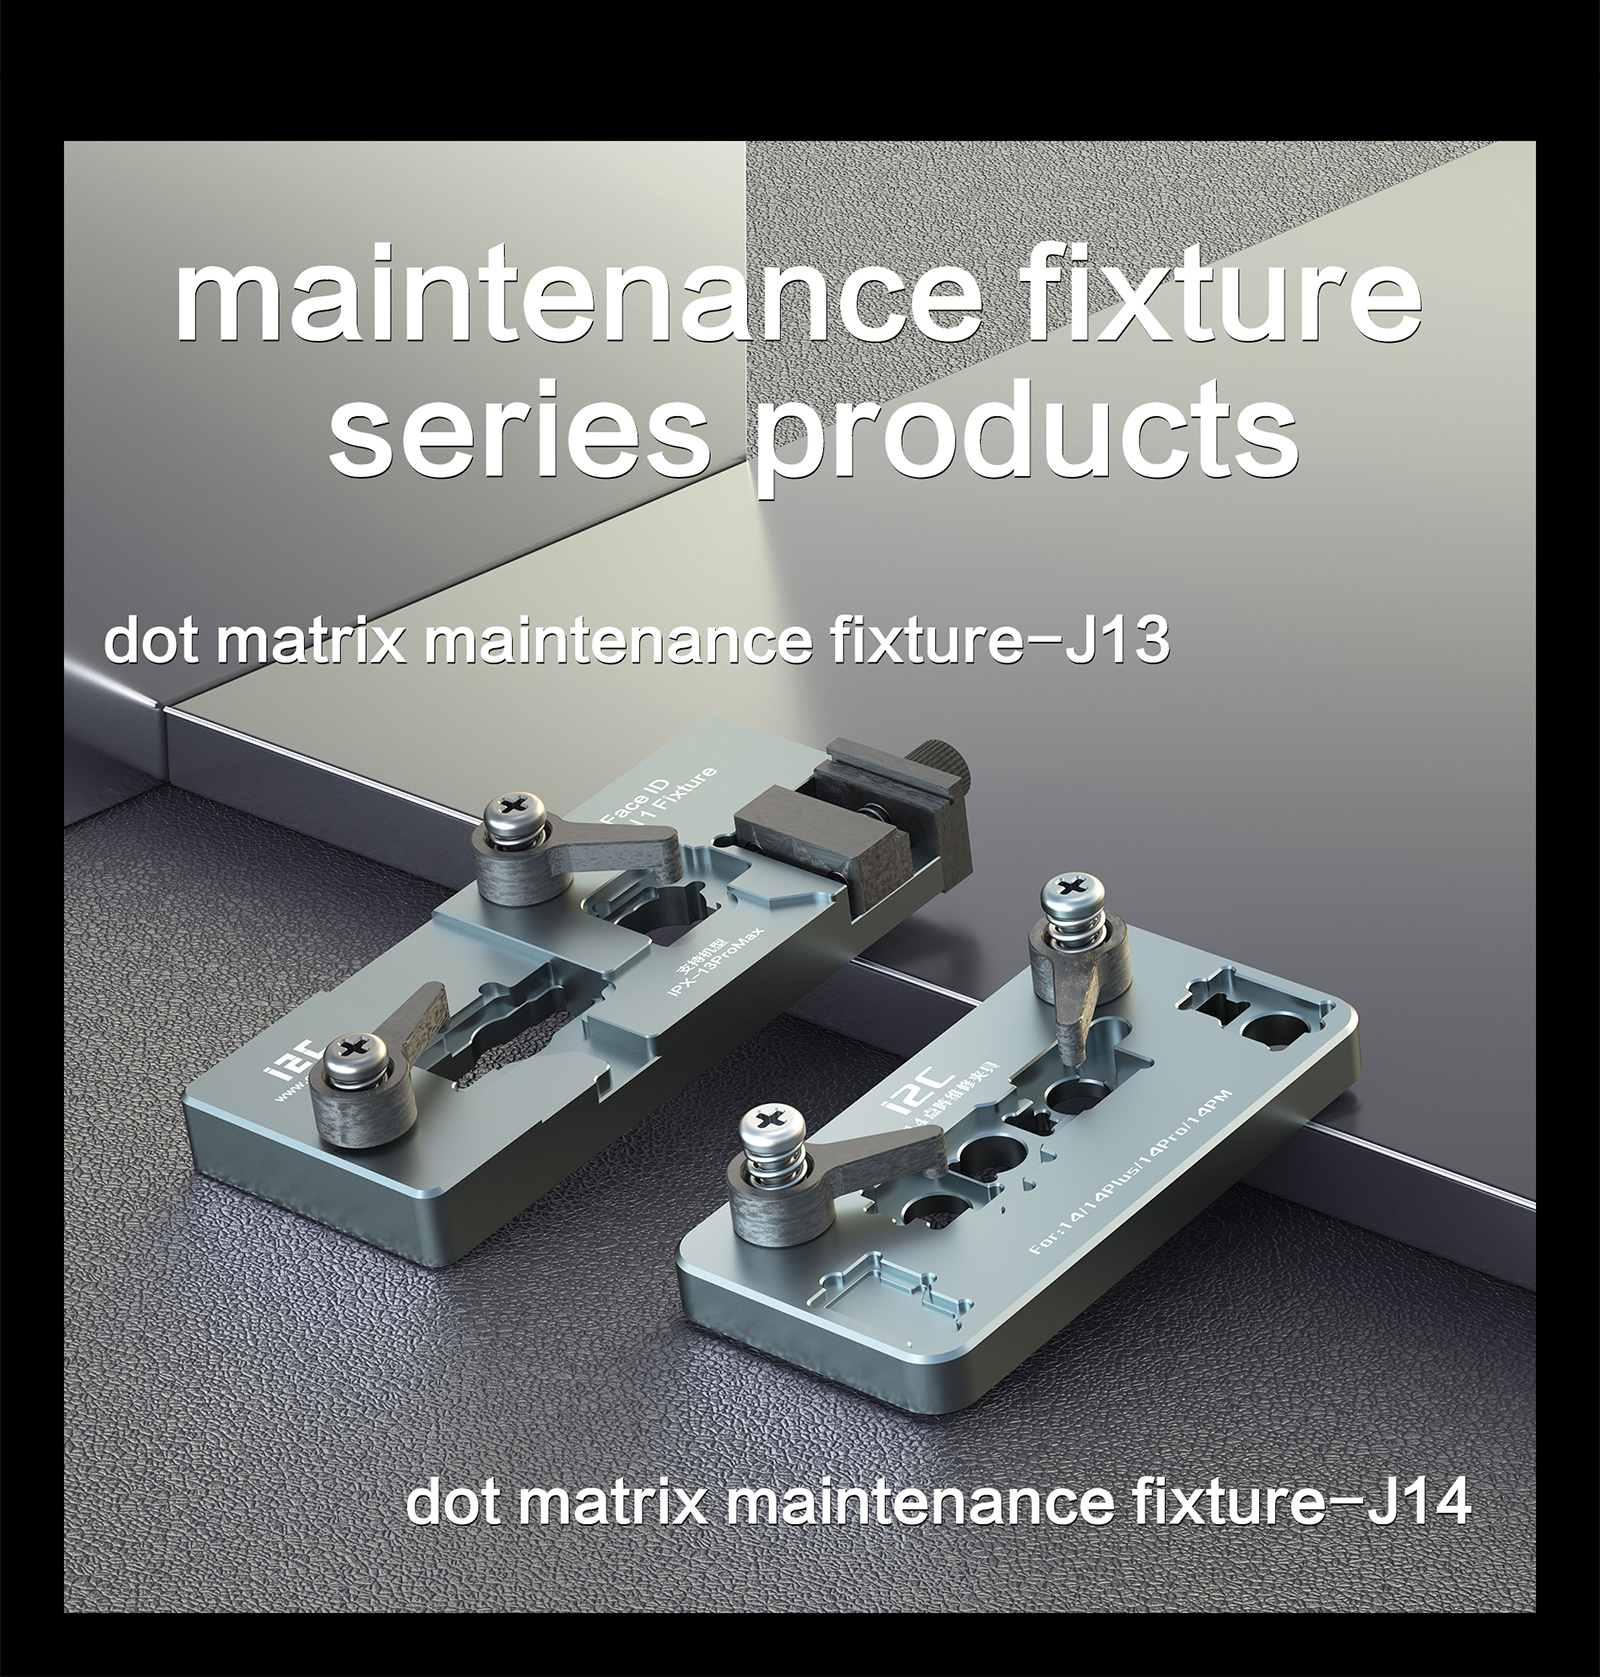 The third generation 15 in 1 dot matrix maintenance fixture(图9)